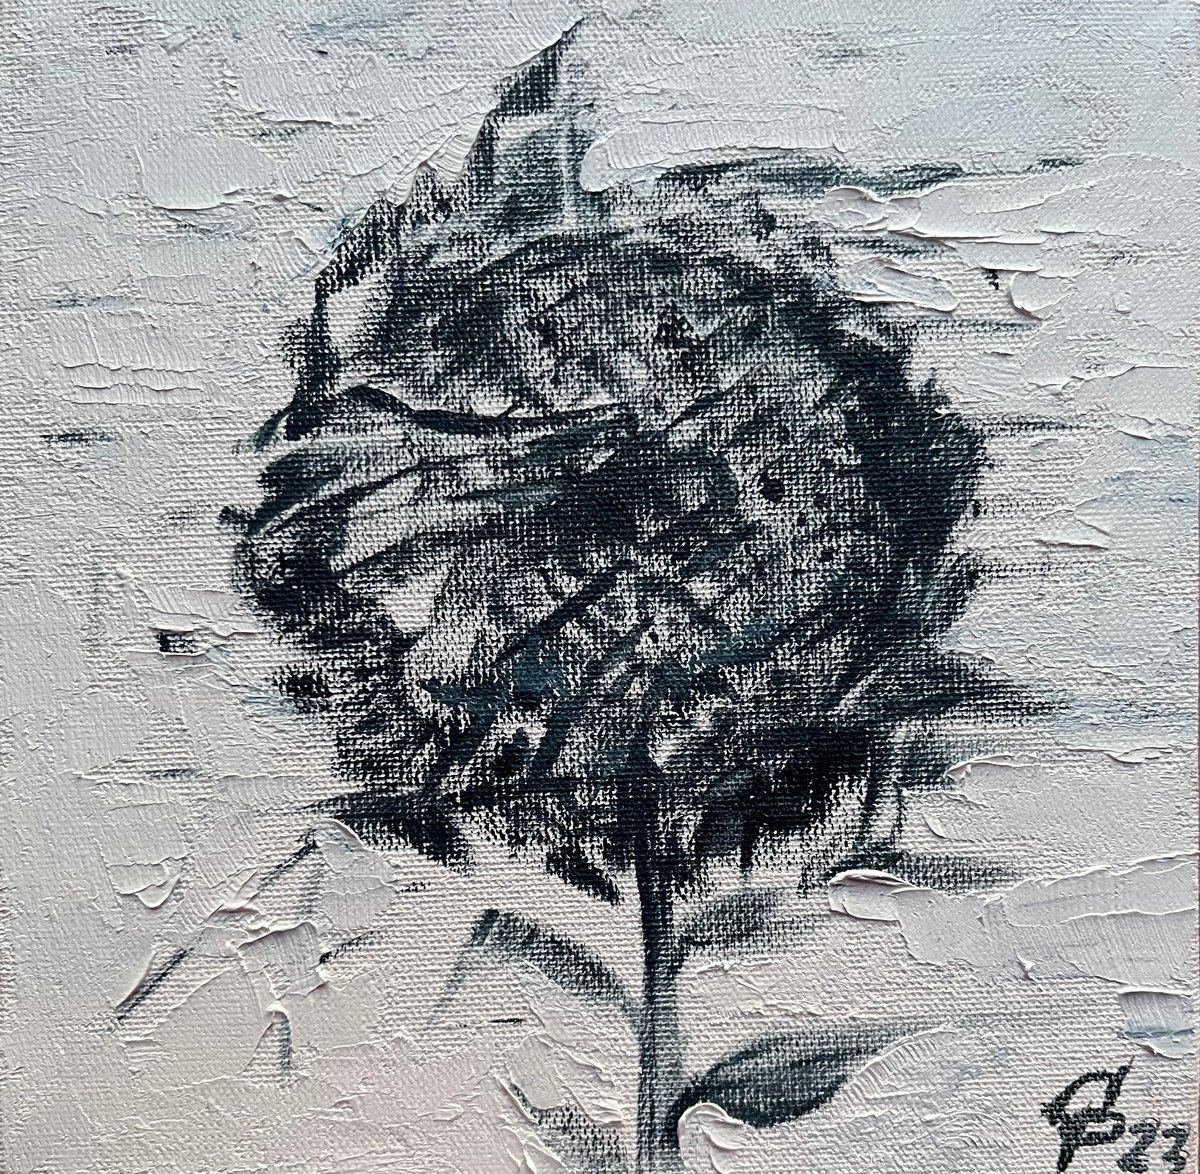 Abstract Sunflower from Ukraine by Roman Sergienko